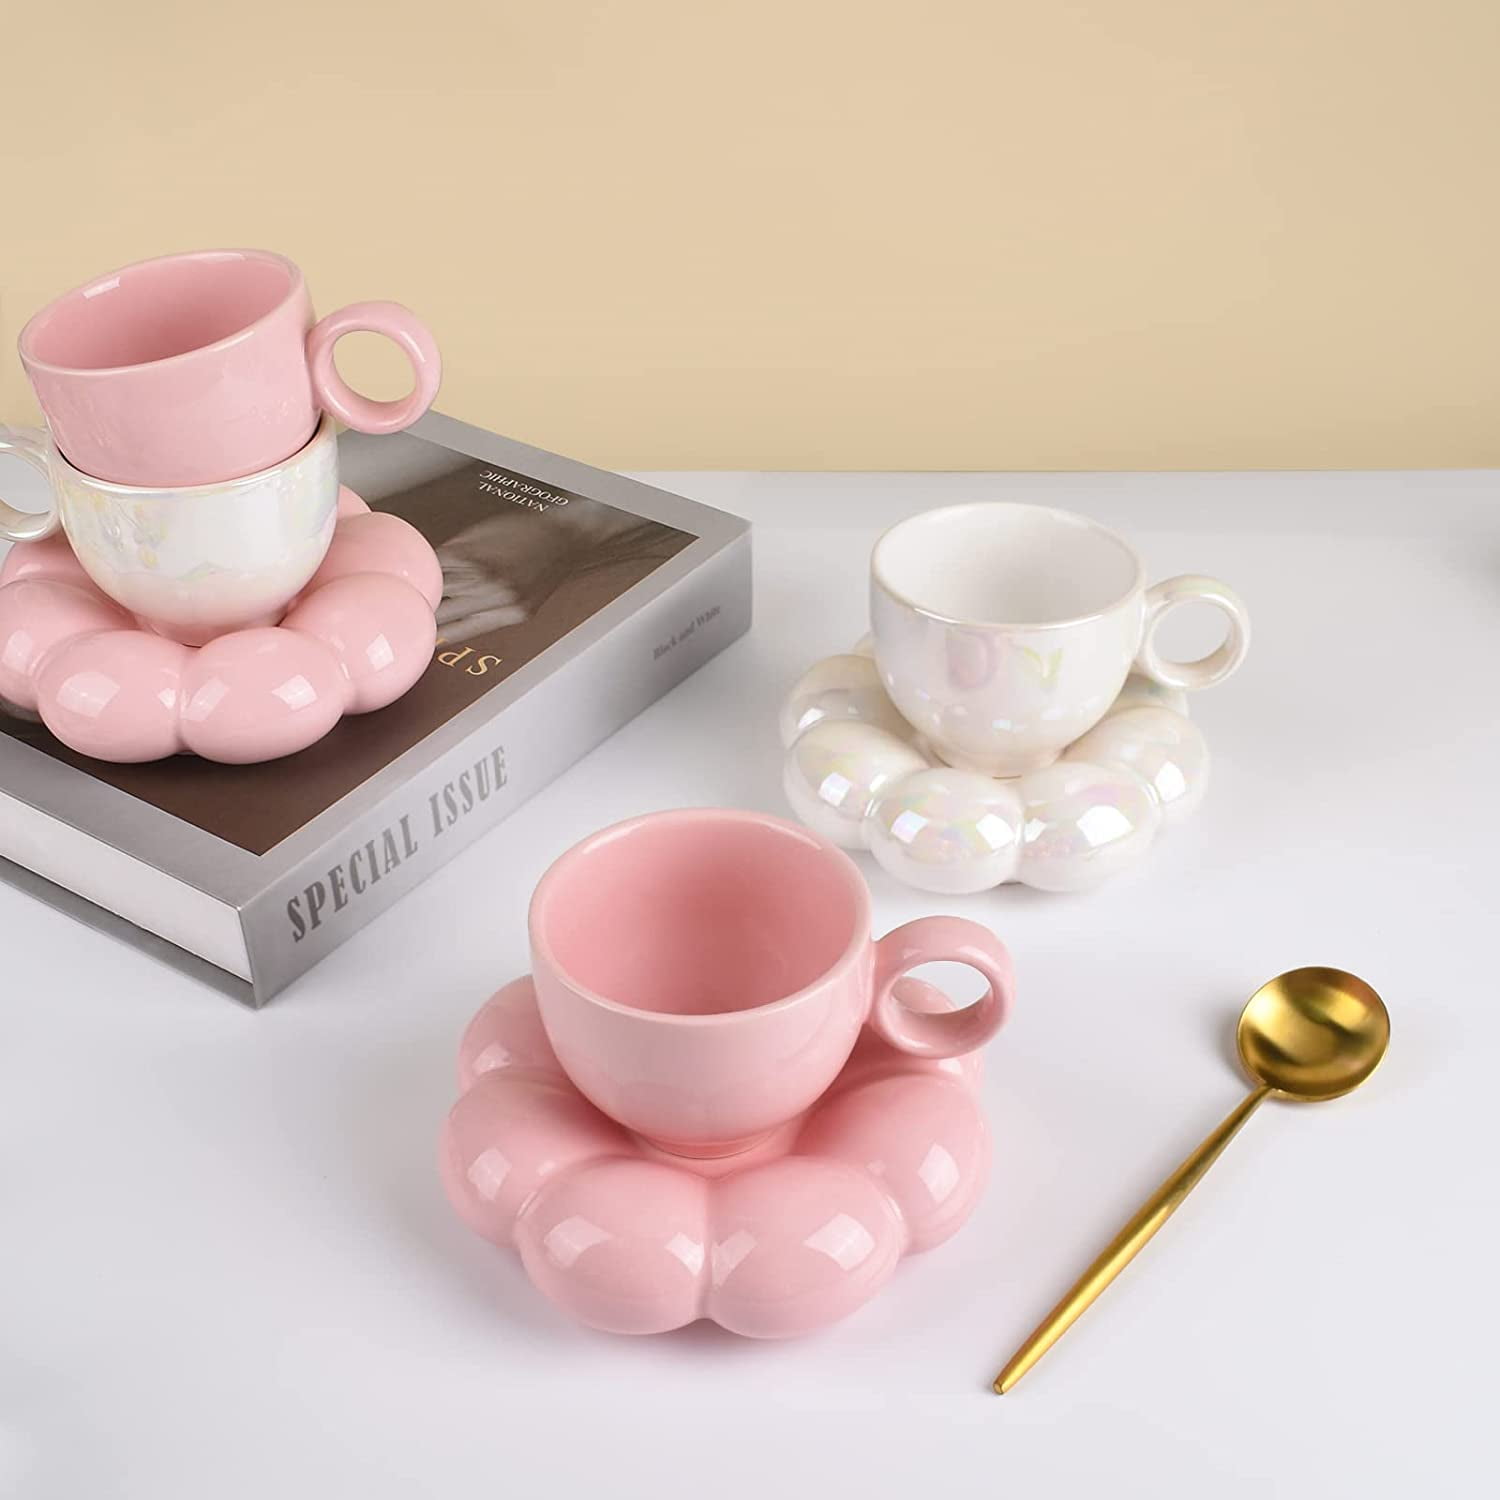 Cuppa Color Mug and Coaster — Divertido